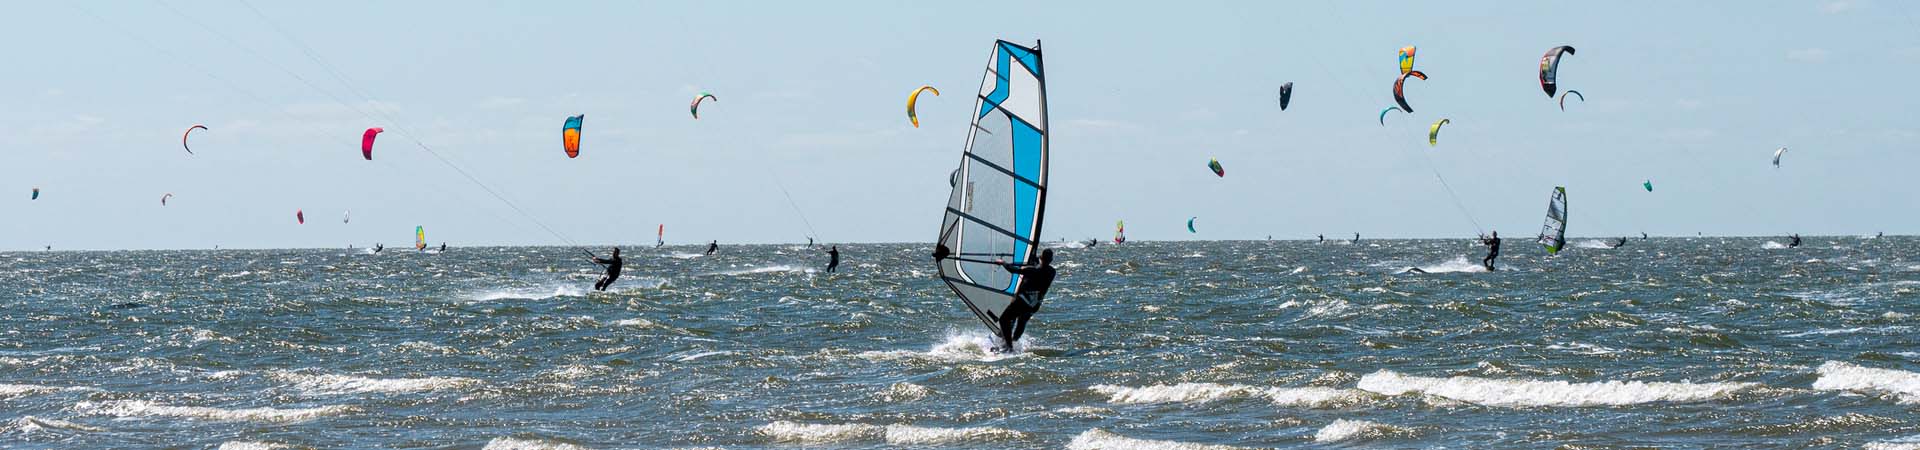 Sport d‘acqua – Windsurf e kitesurf.